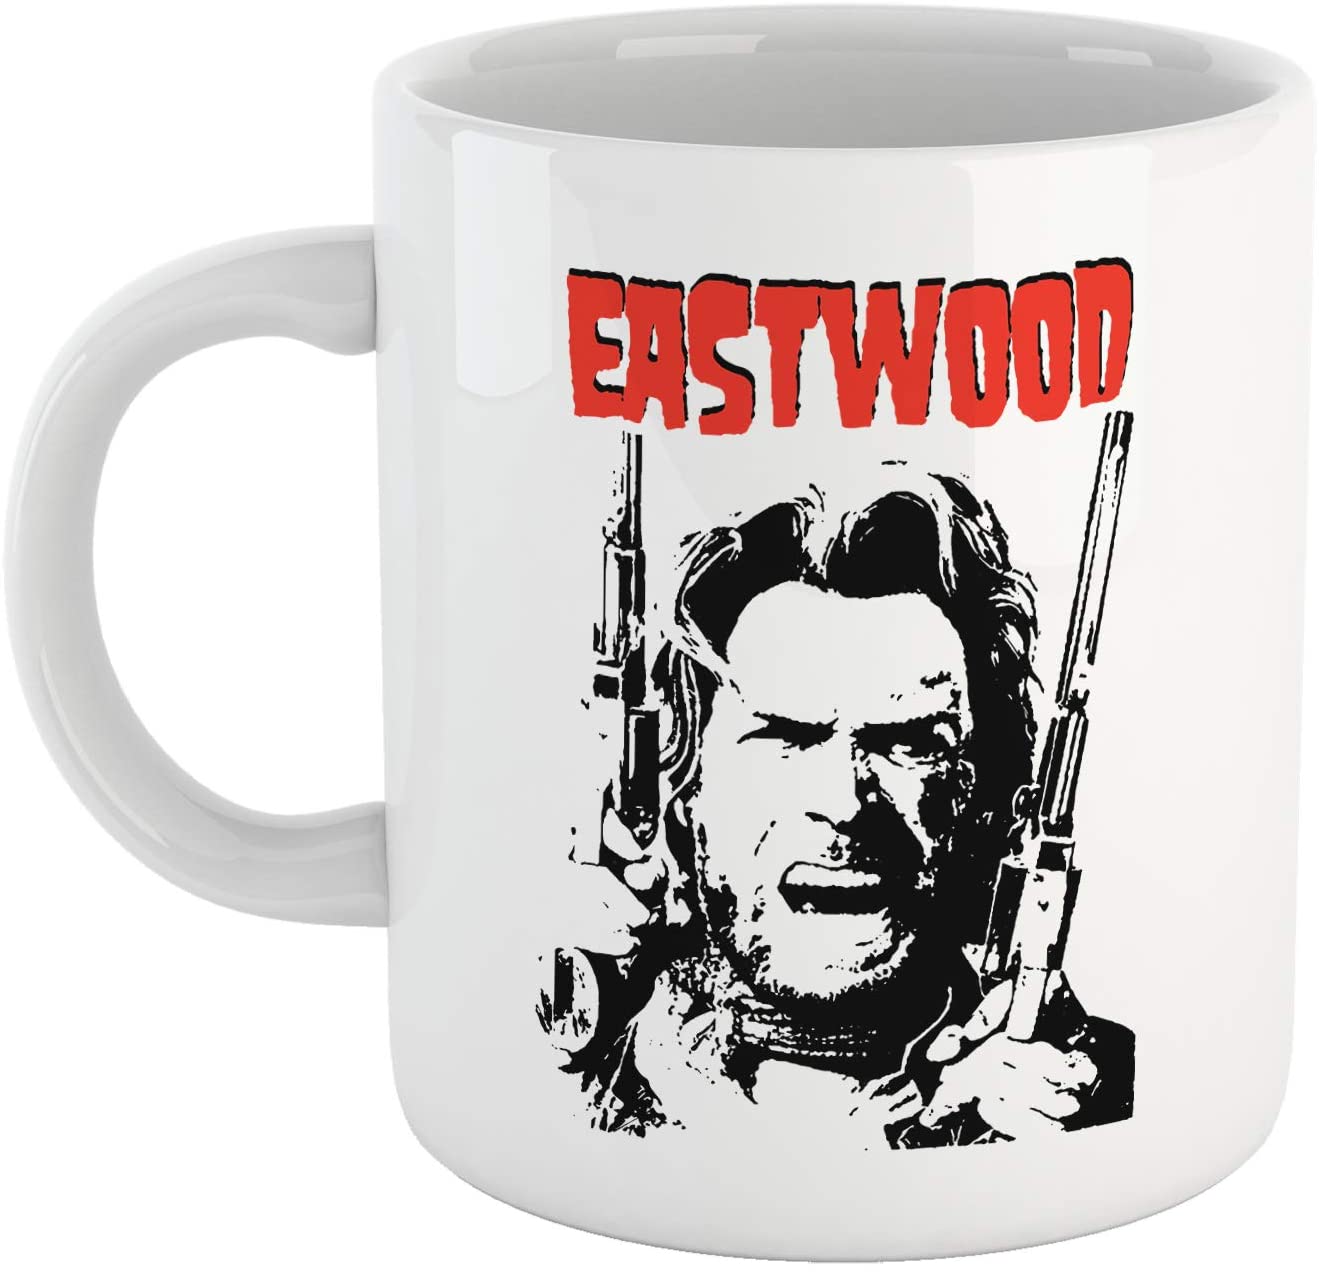 White Smoke Tazza Clint Eastwood - Mug sull'attore di Film Western - Choose Ur Color Cuc shop